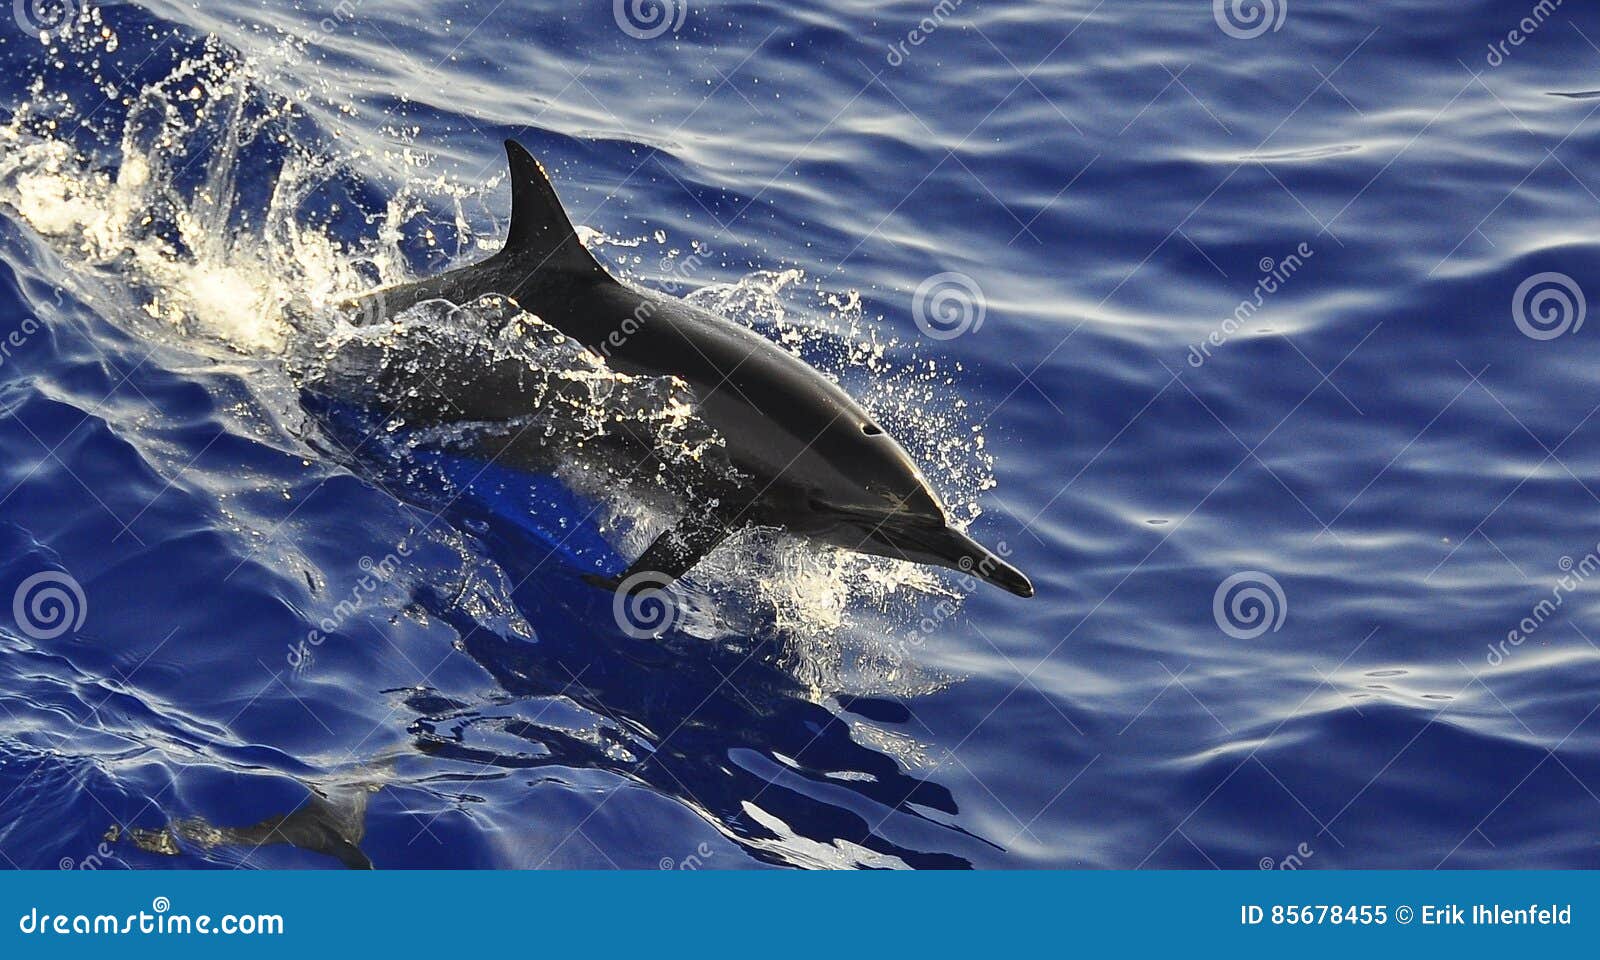 wild dolphin